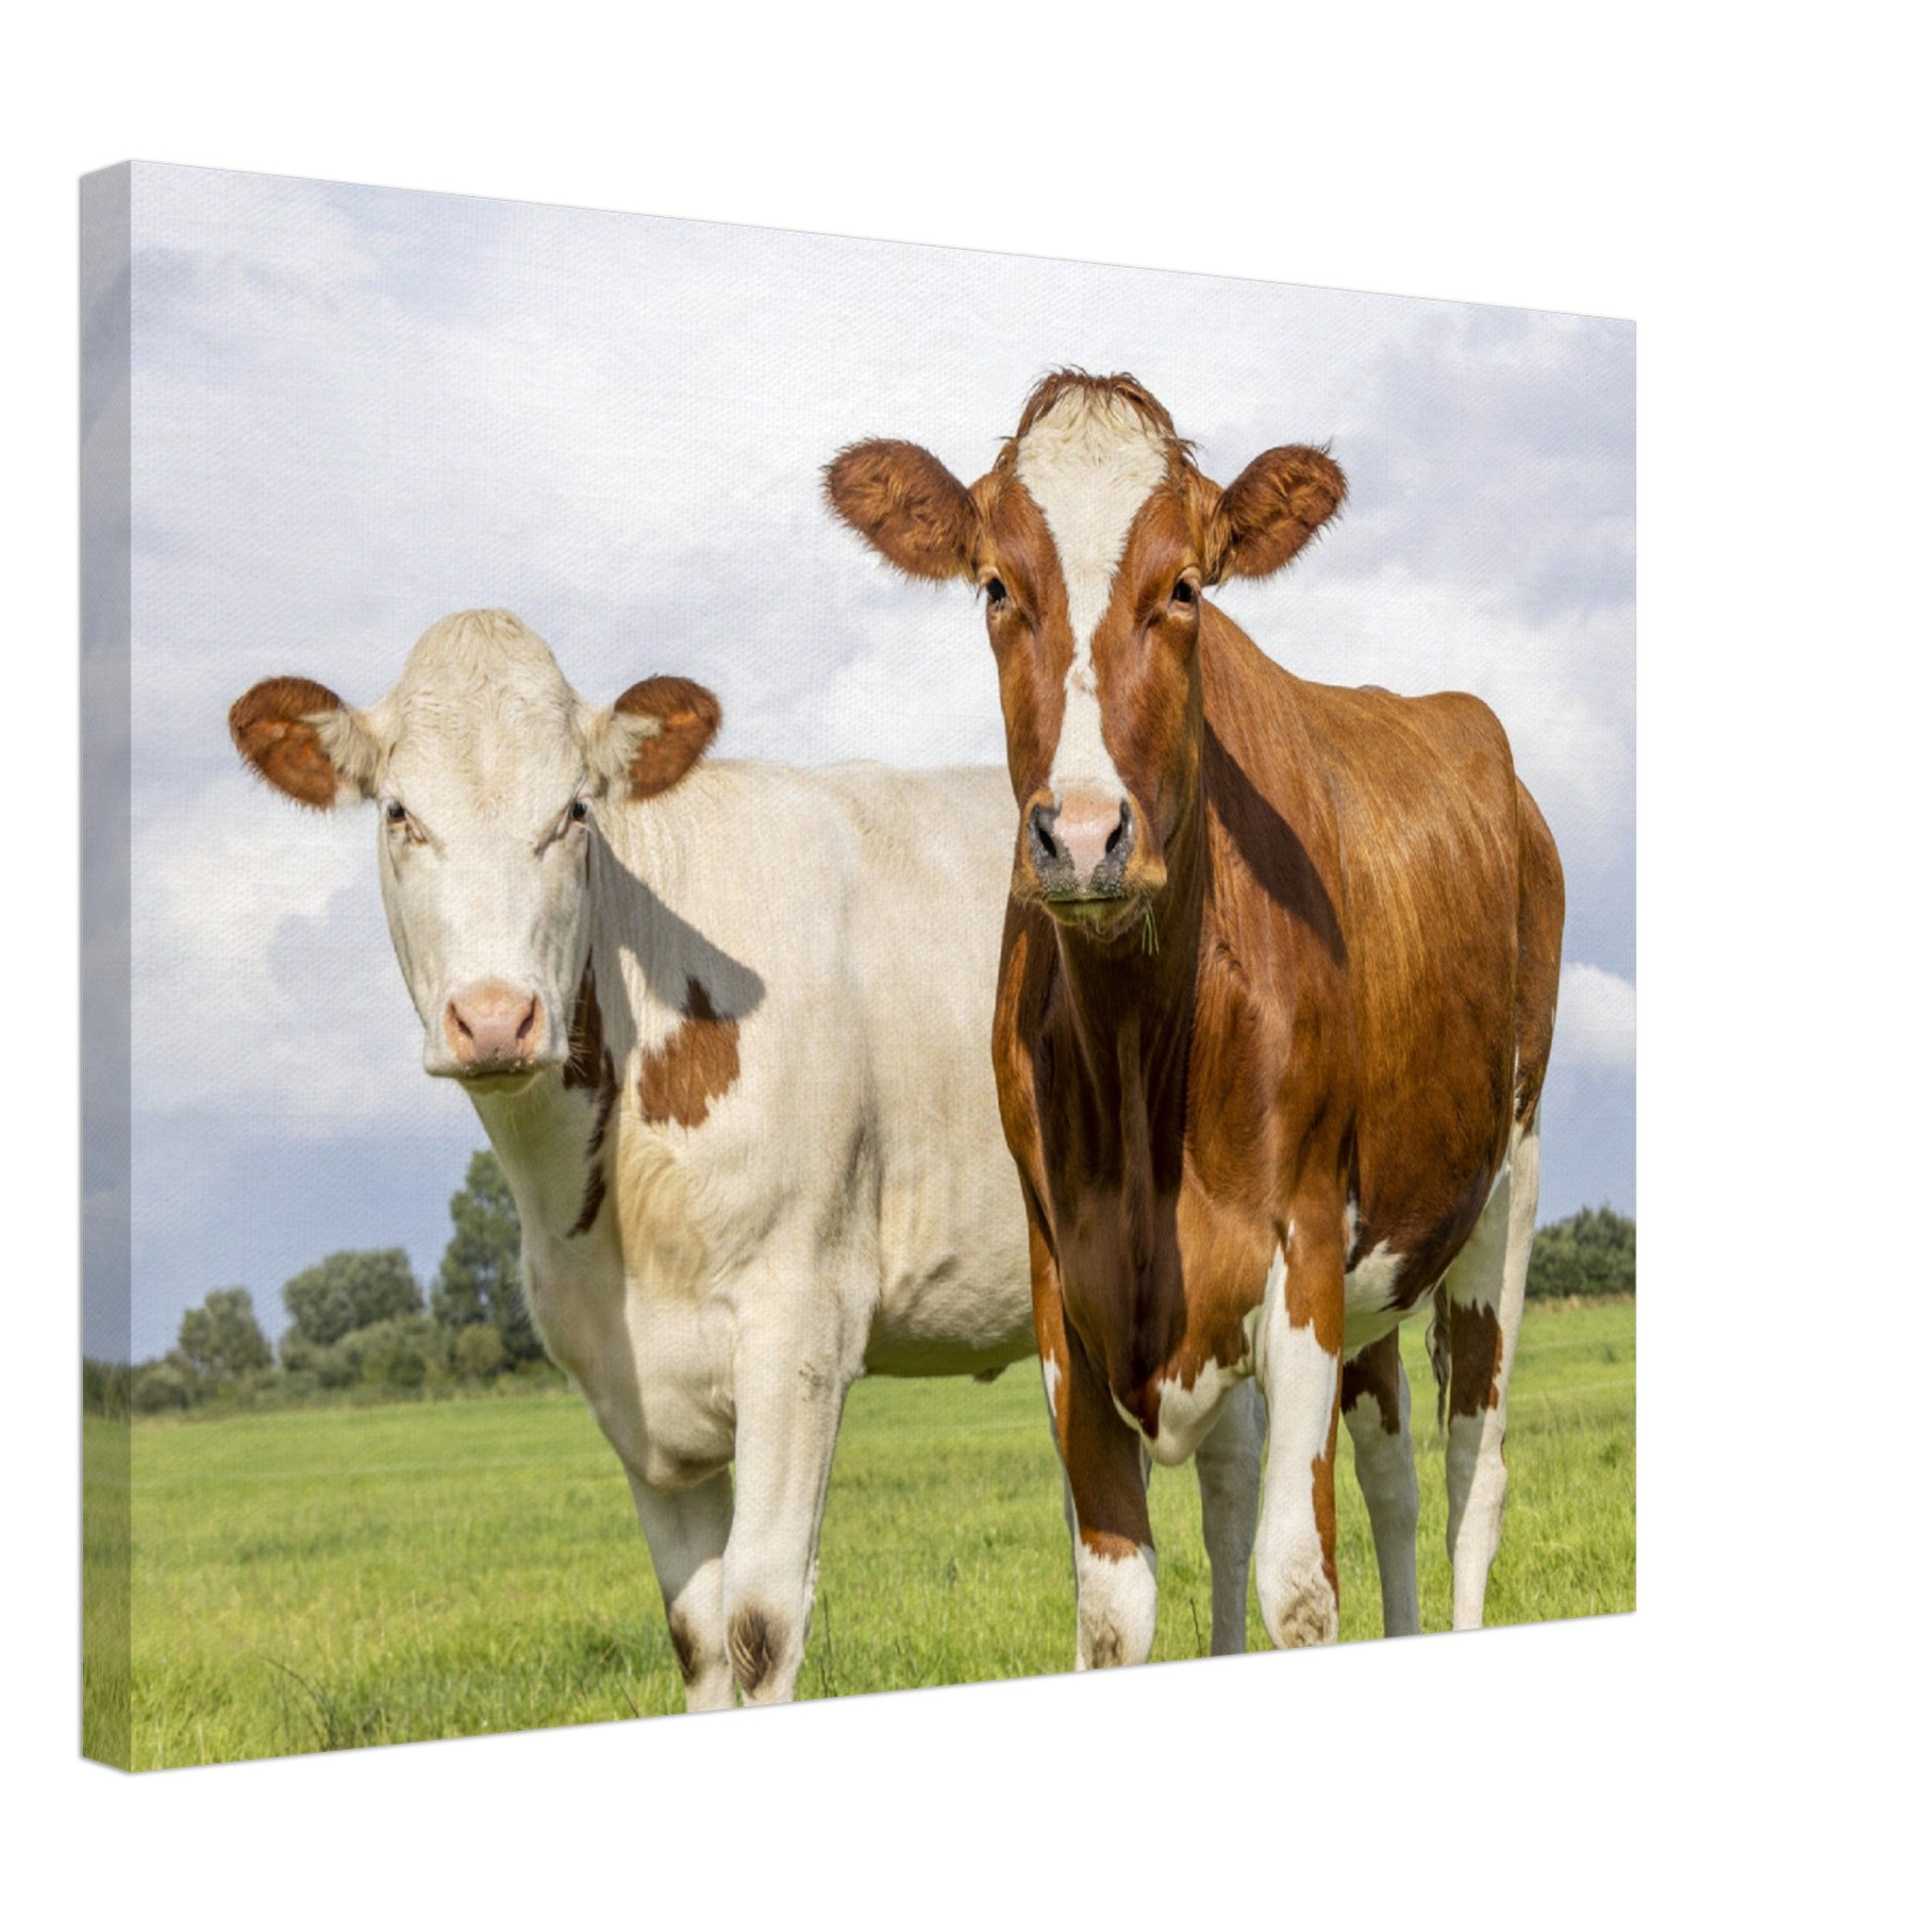 Cows in Field Canvas Wall Art